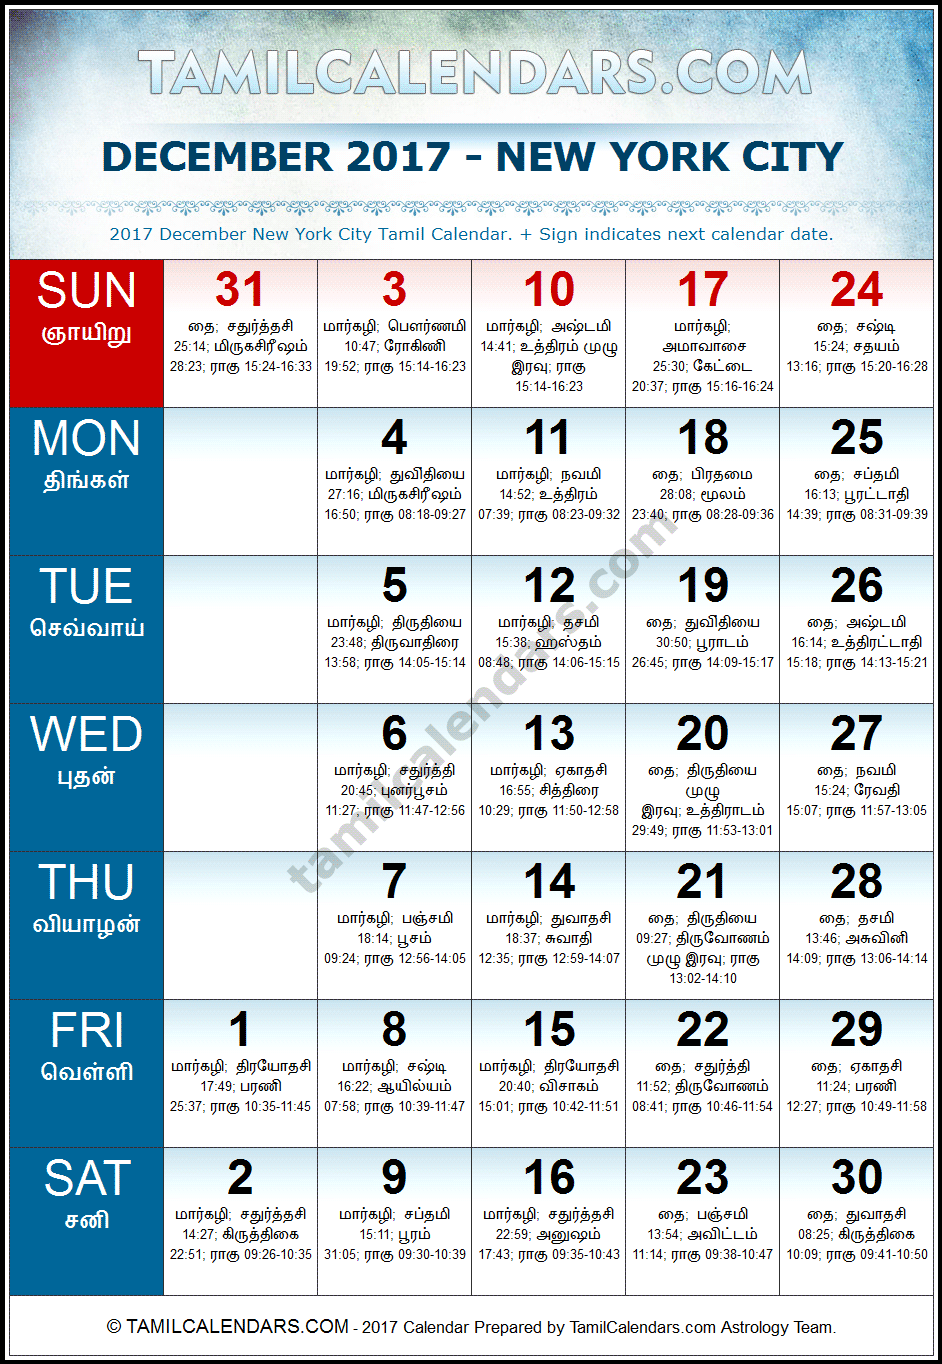 December 2017 Tamil Calendar for New York, USA